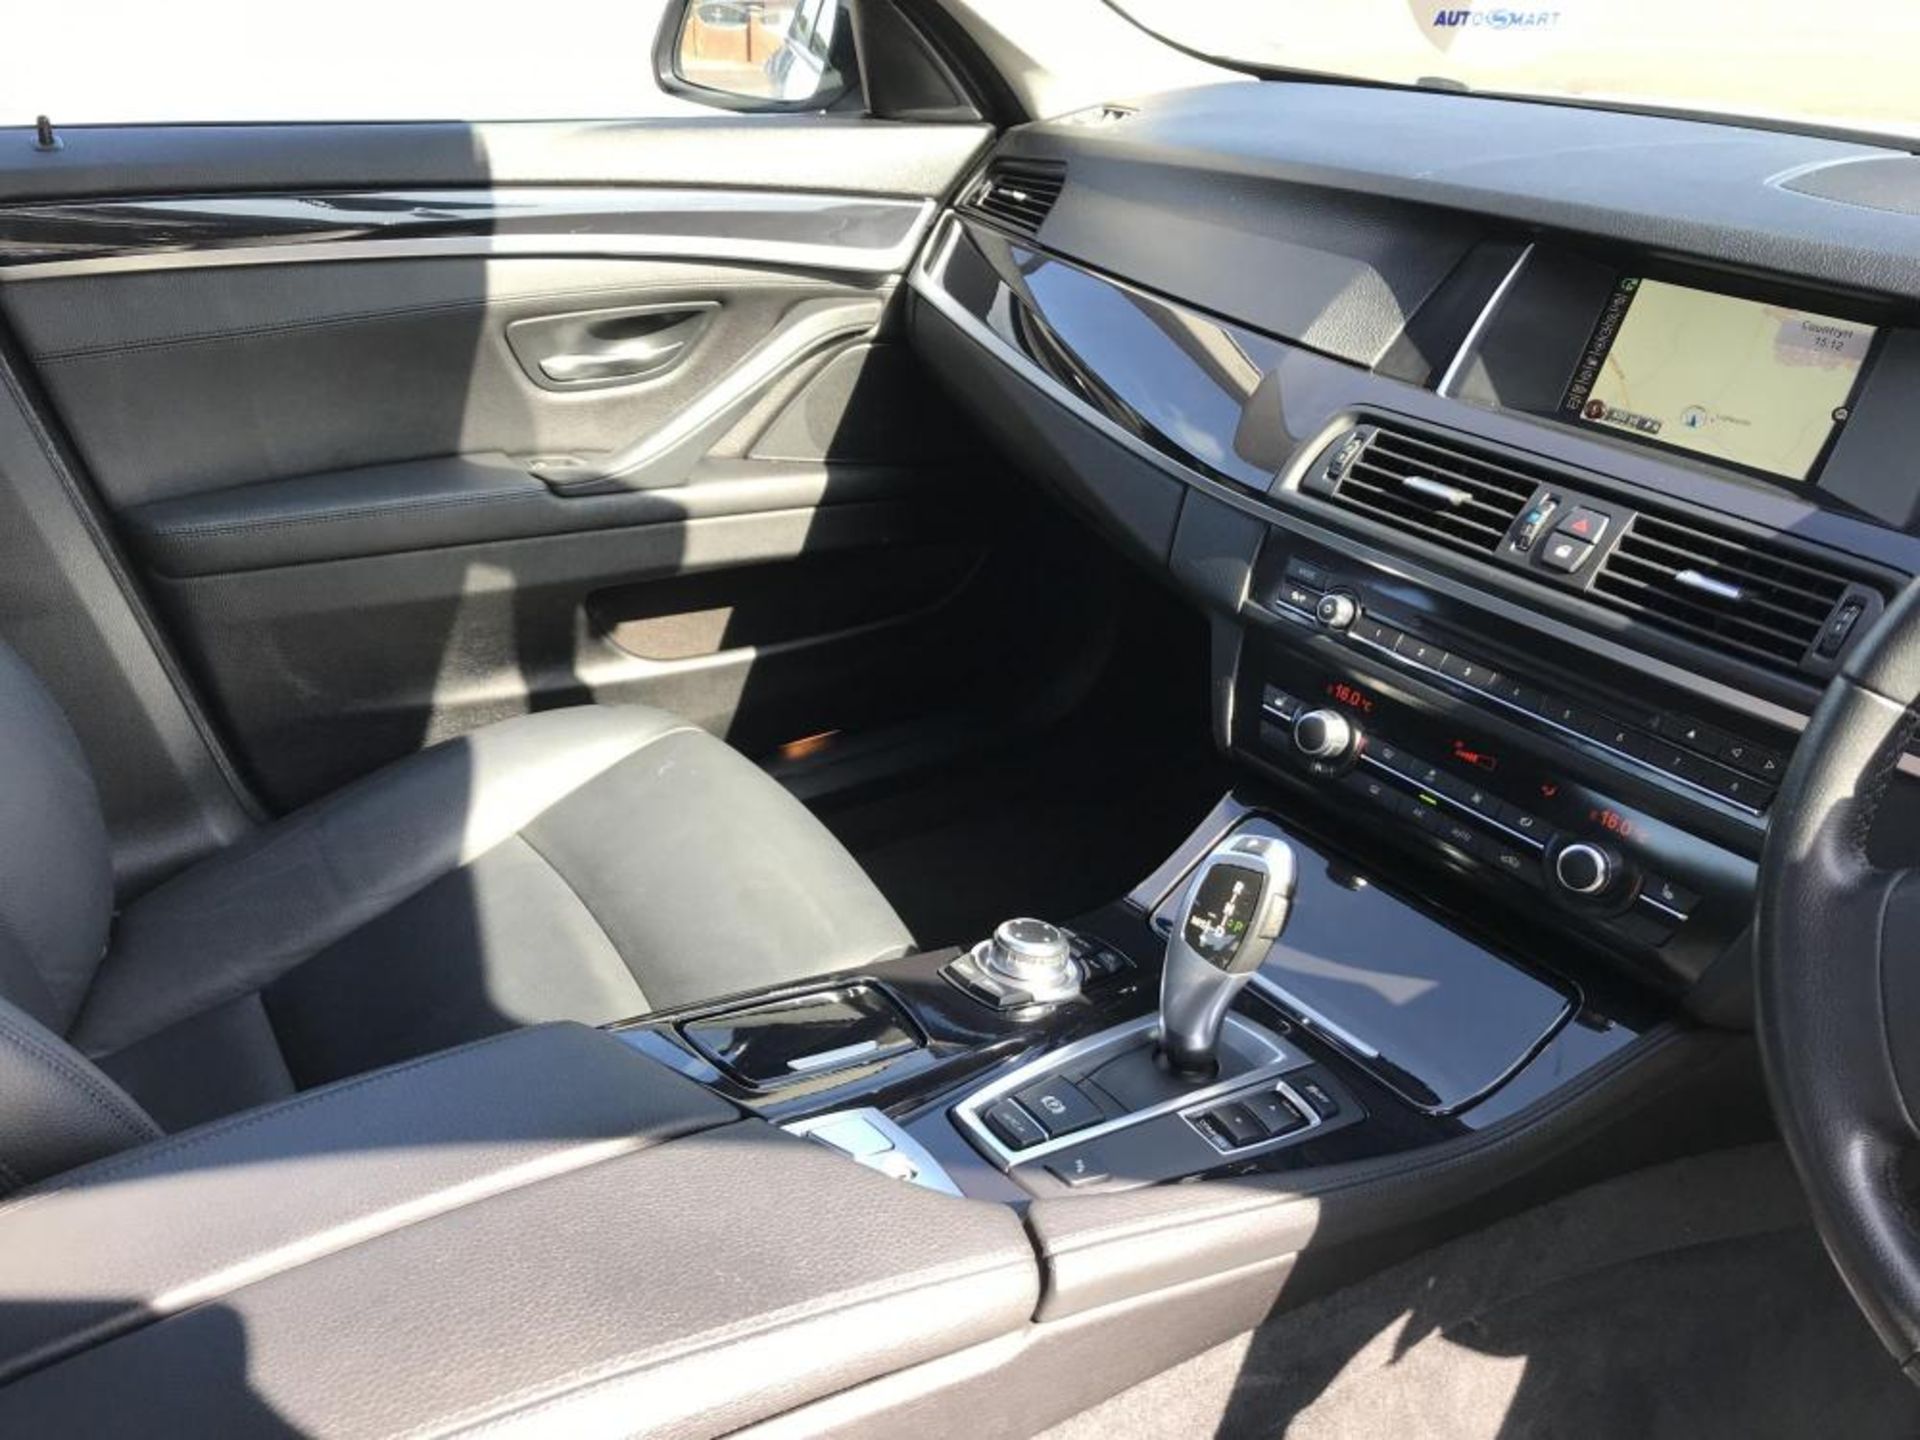 2015/65 REG BMW 520D SE AUTO 2.0 DIESEL 4 DOOR SALOON, SHOWING 0 FORMER KEEPERS *NO VAT* - Image 15 of 19